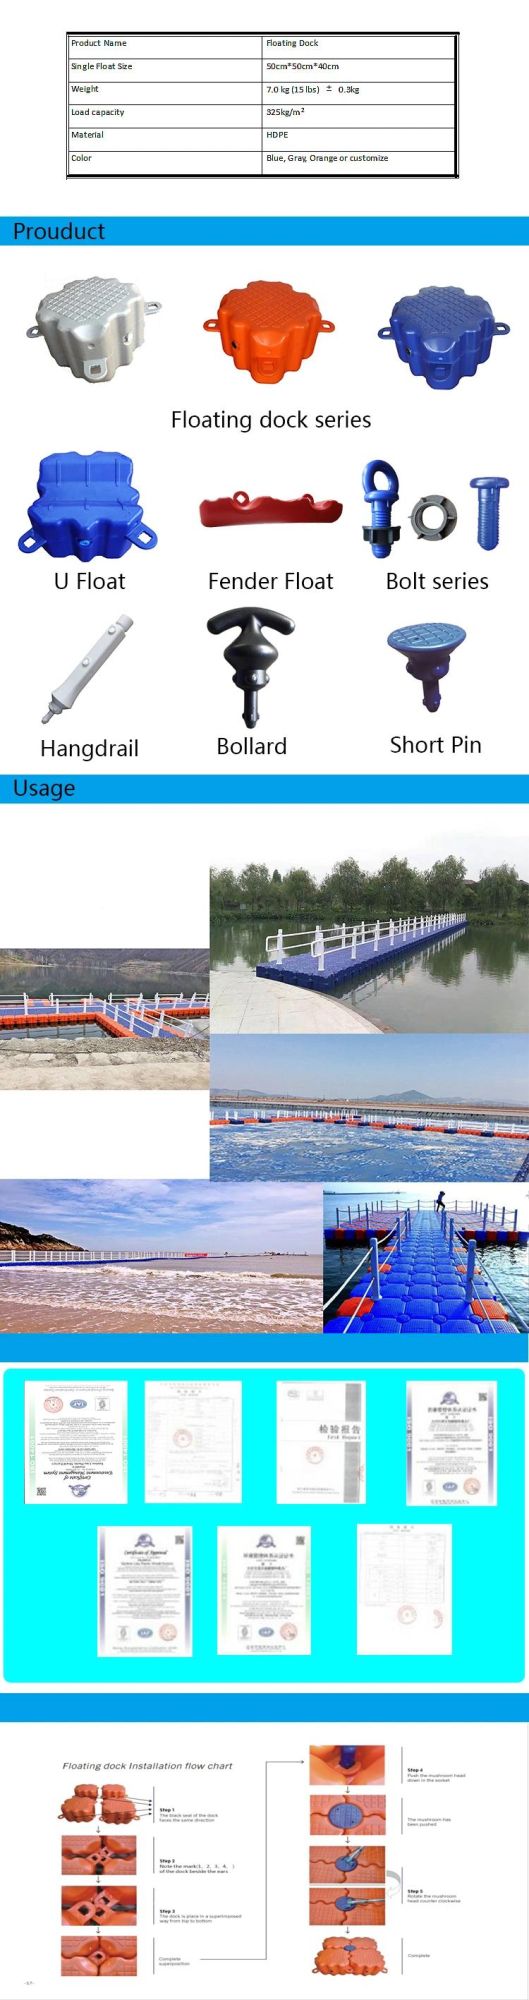 Blossom Style Water Platform Jet Ski Floating Dock Marine Supplies